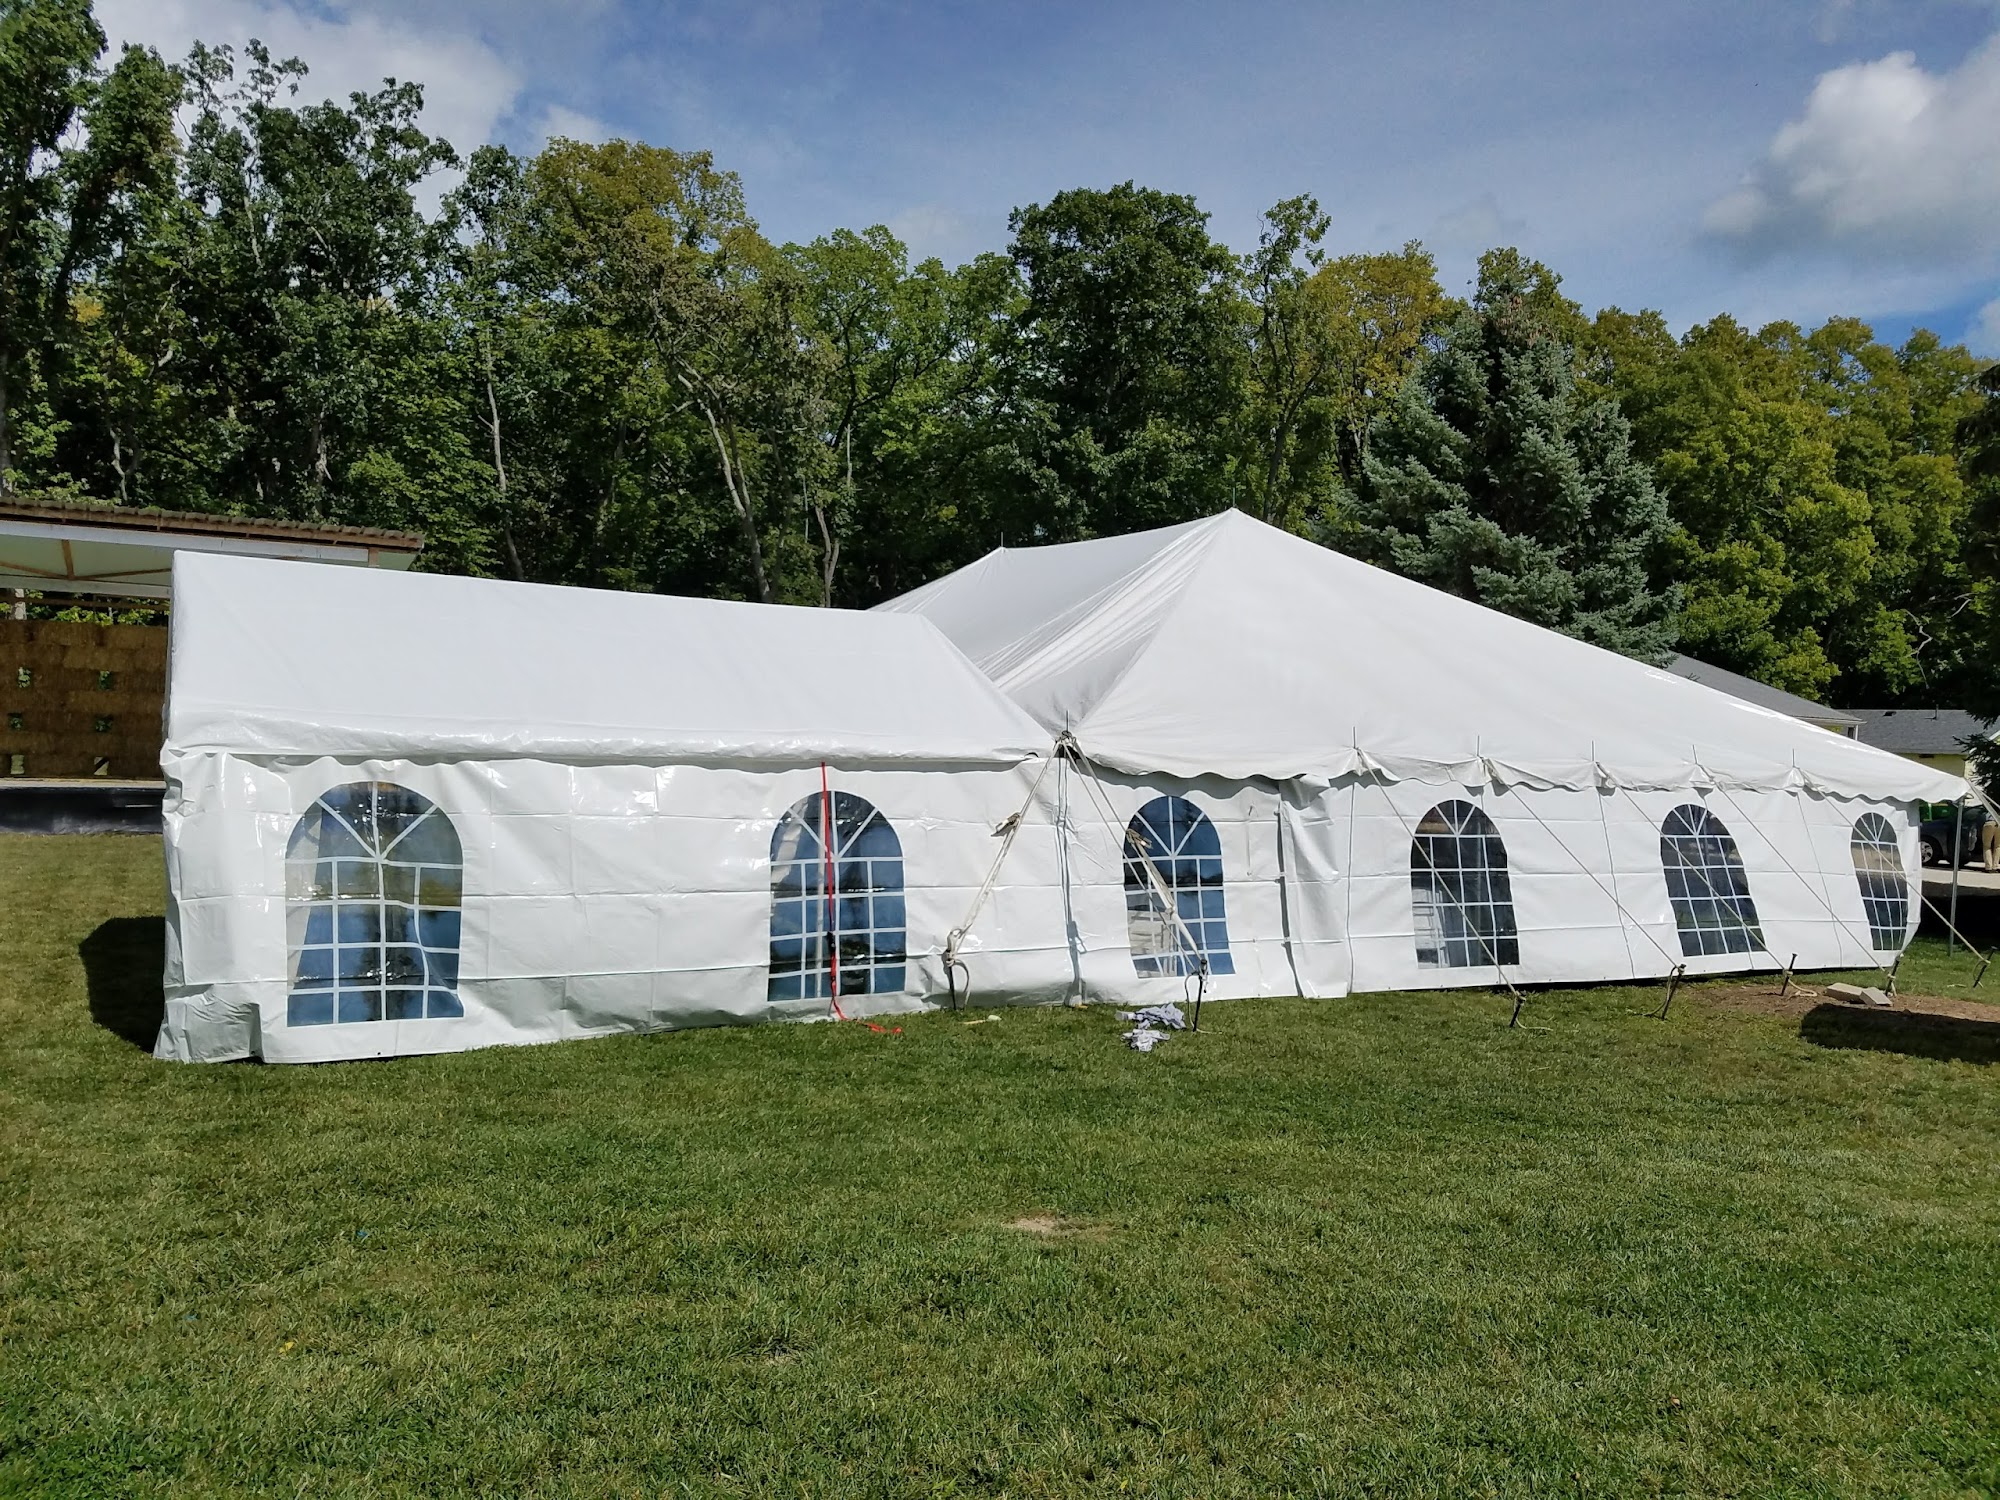 B & C Tent Rental LLC 308 W Washington St, Oak Harbor Ohio 43449